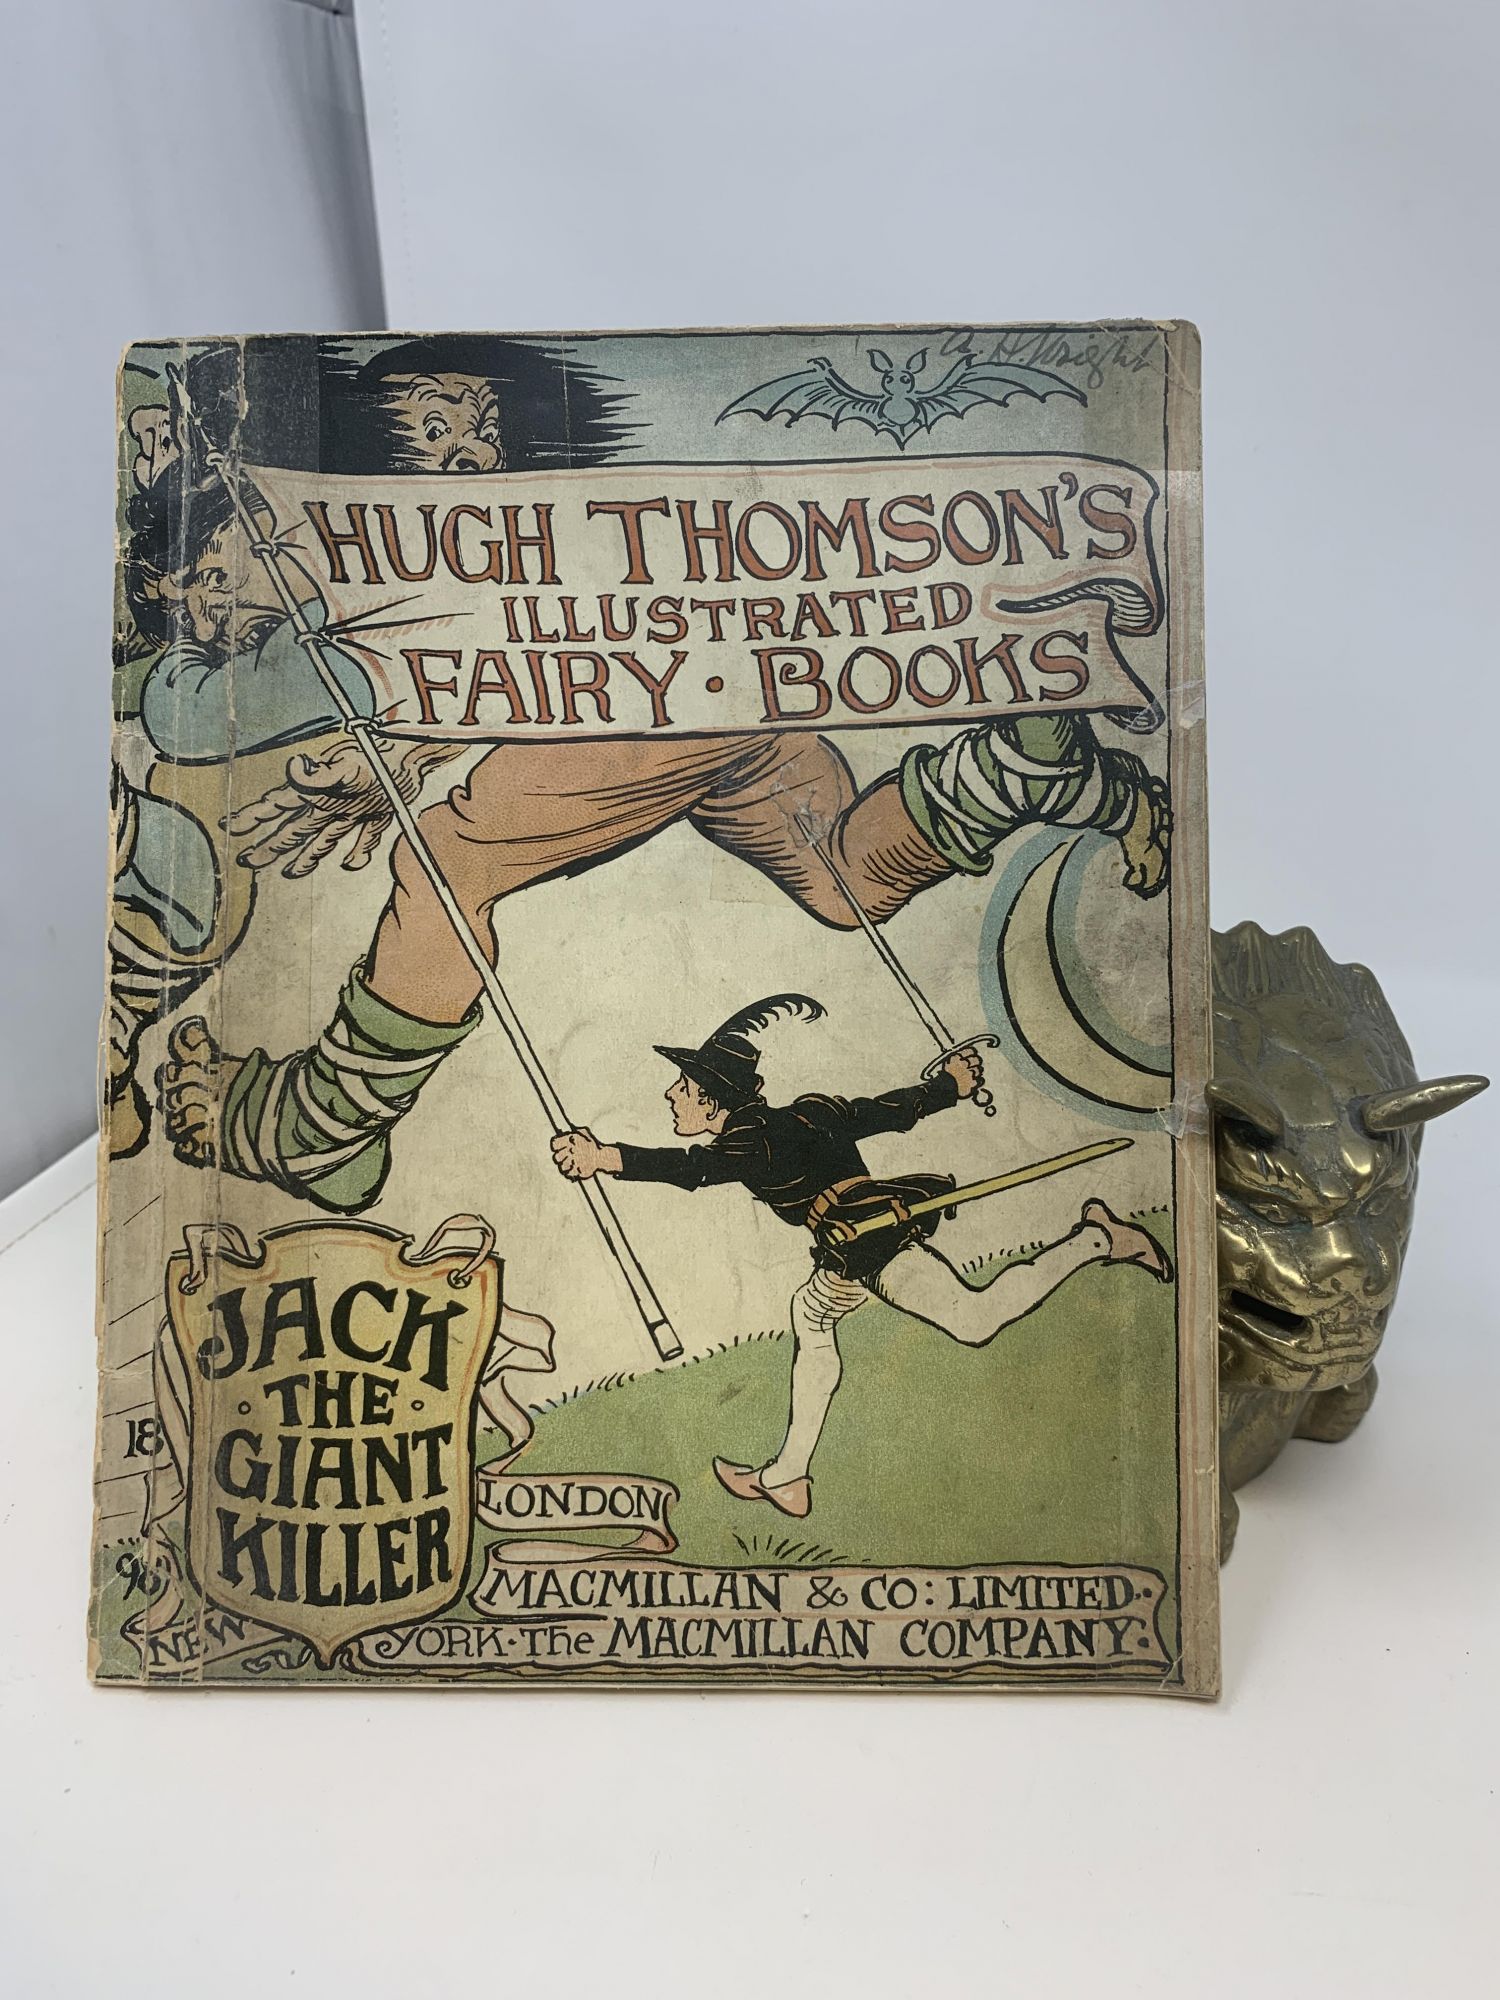 Thomson, Hugh - Jack the Giant Killer (Hugh Thomson's Illustrated Fairy Books)